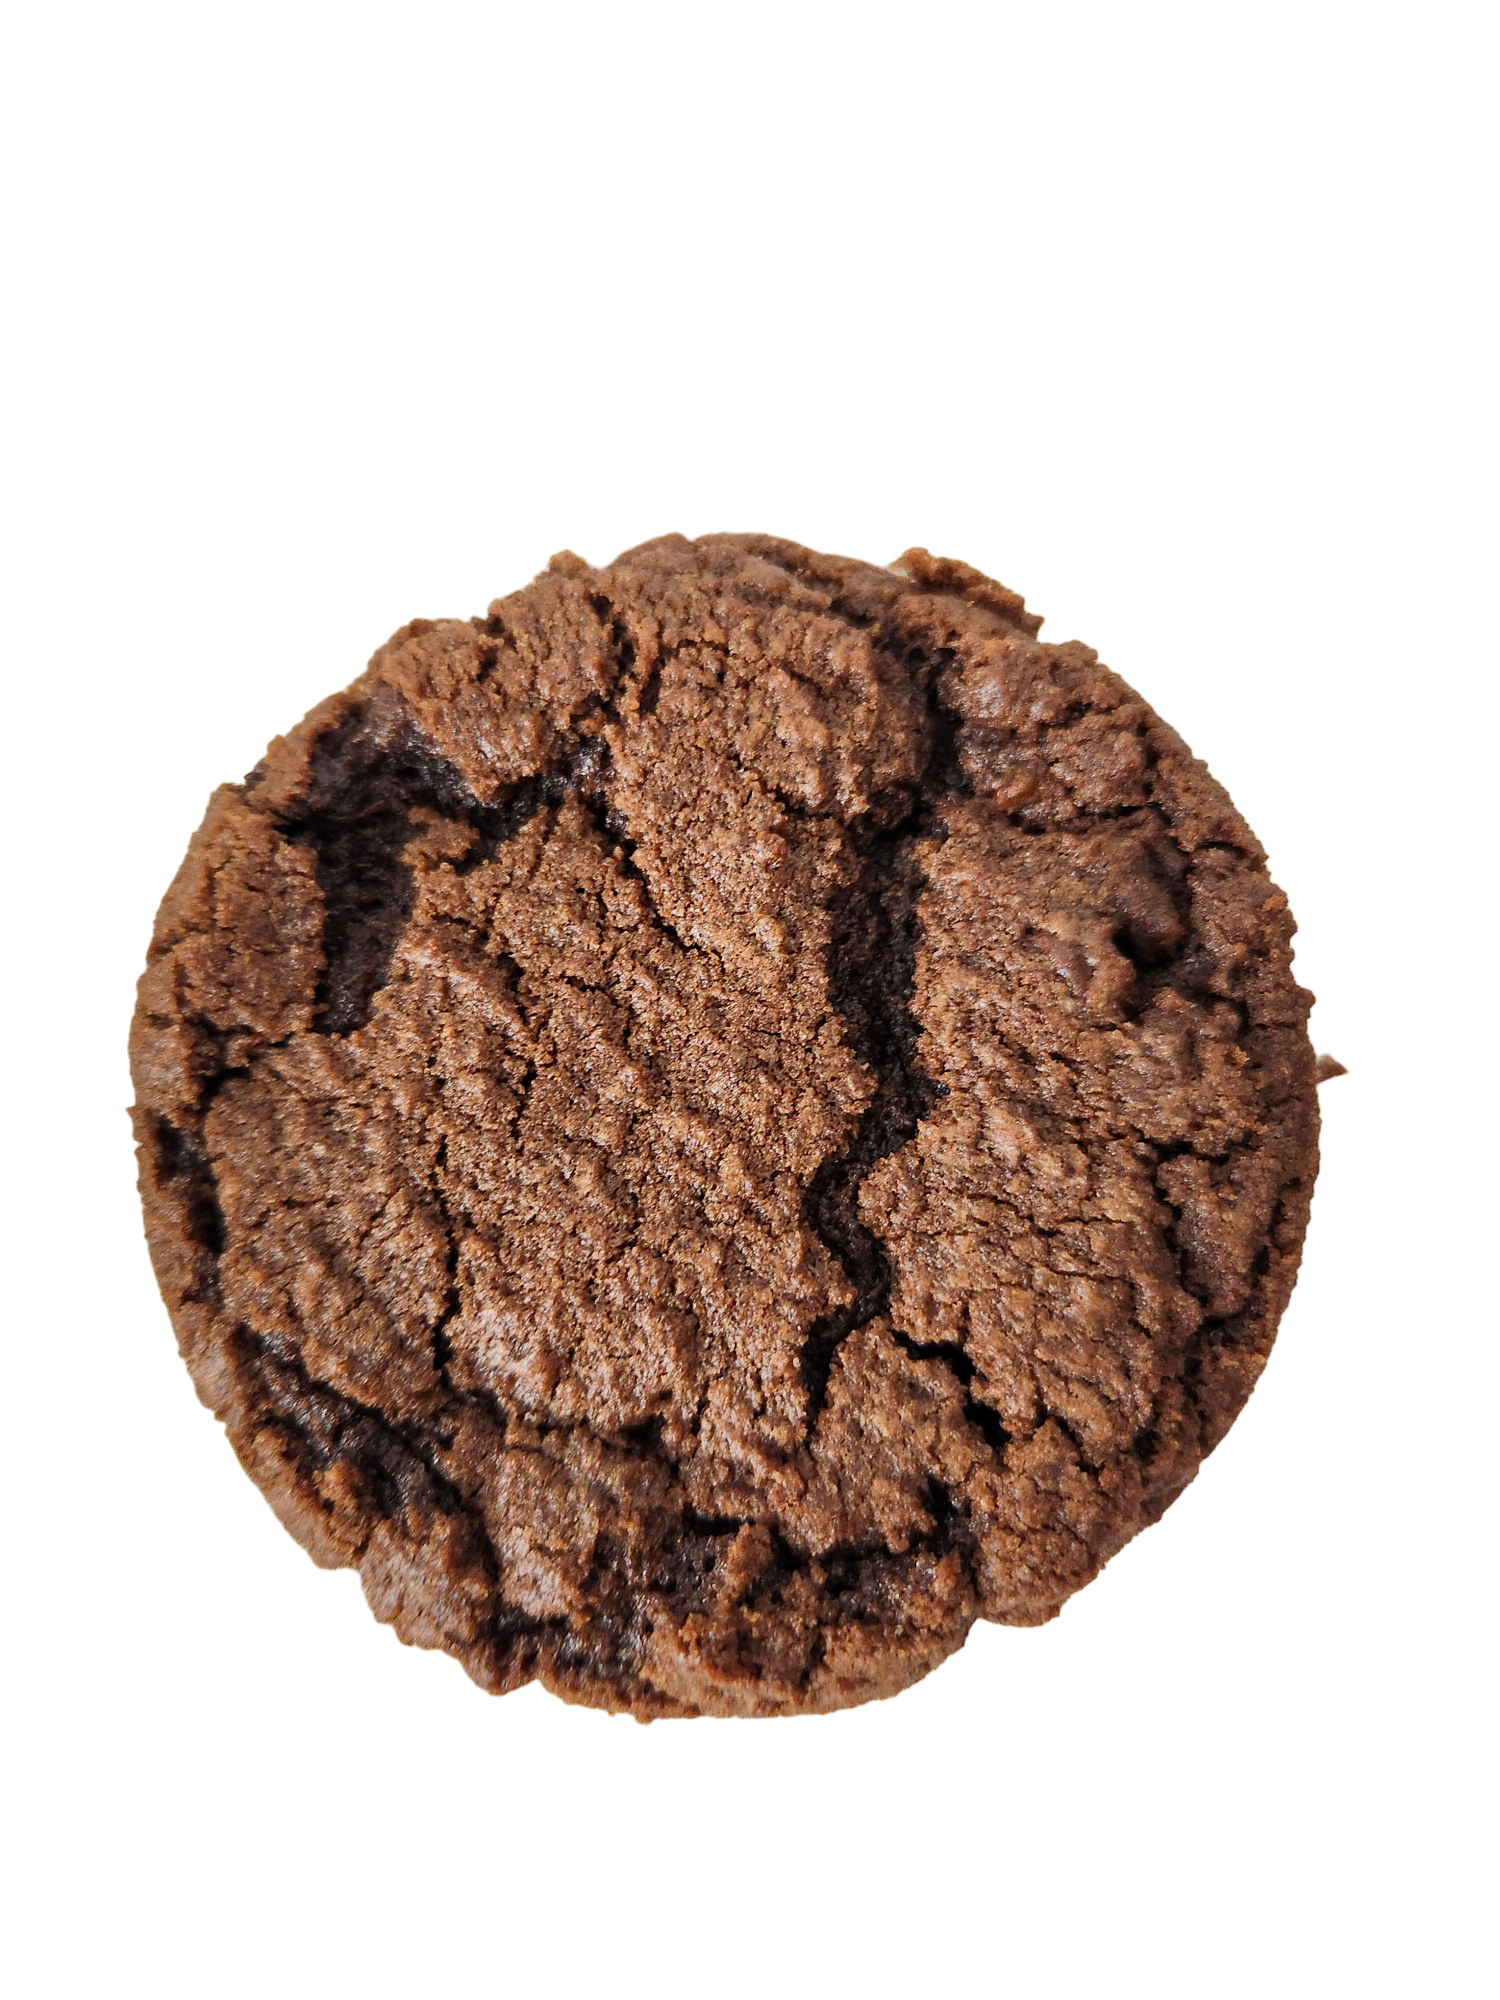 Pop's Double Chocolate Chip cookies